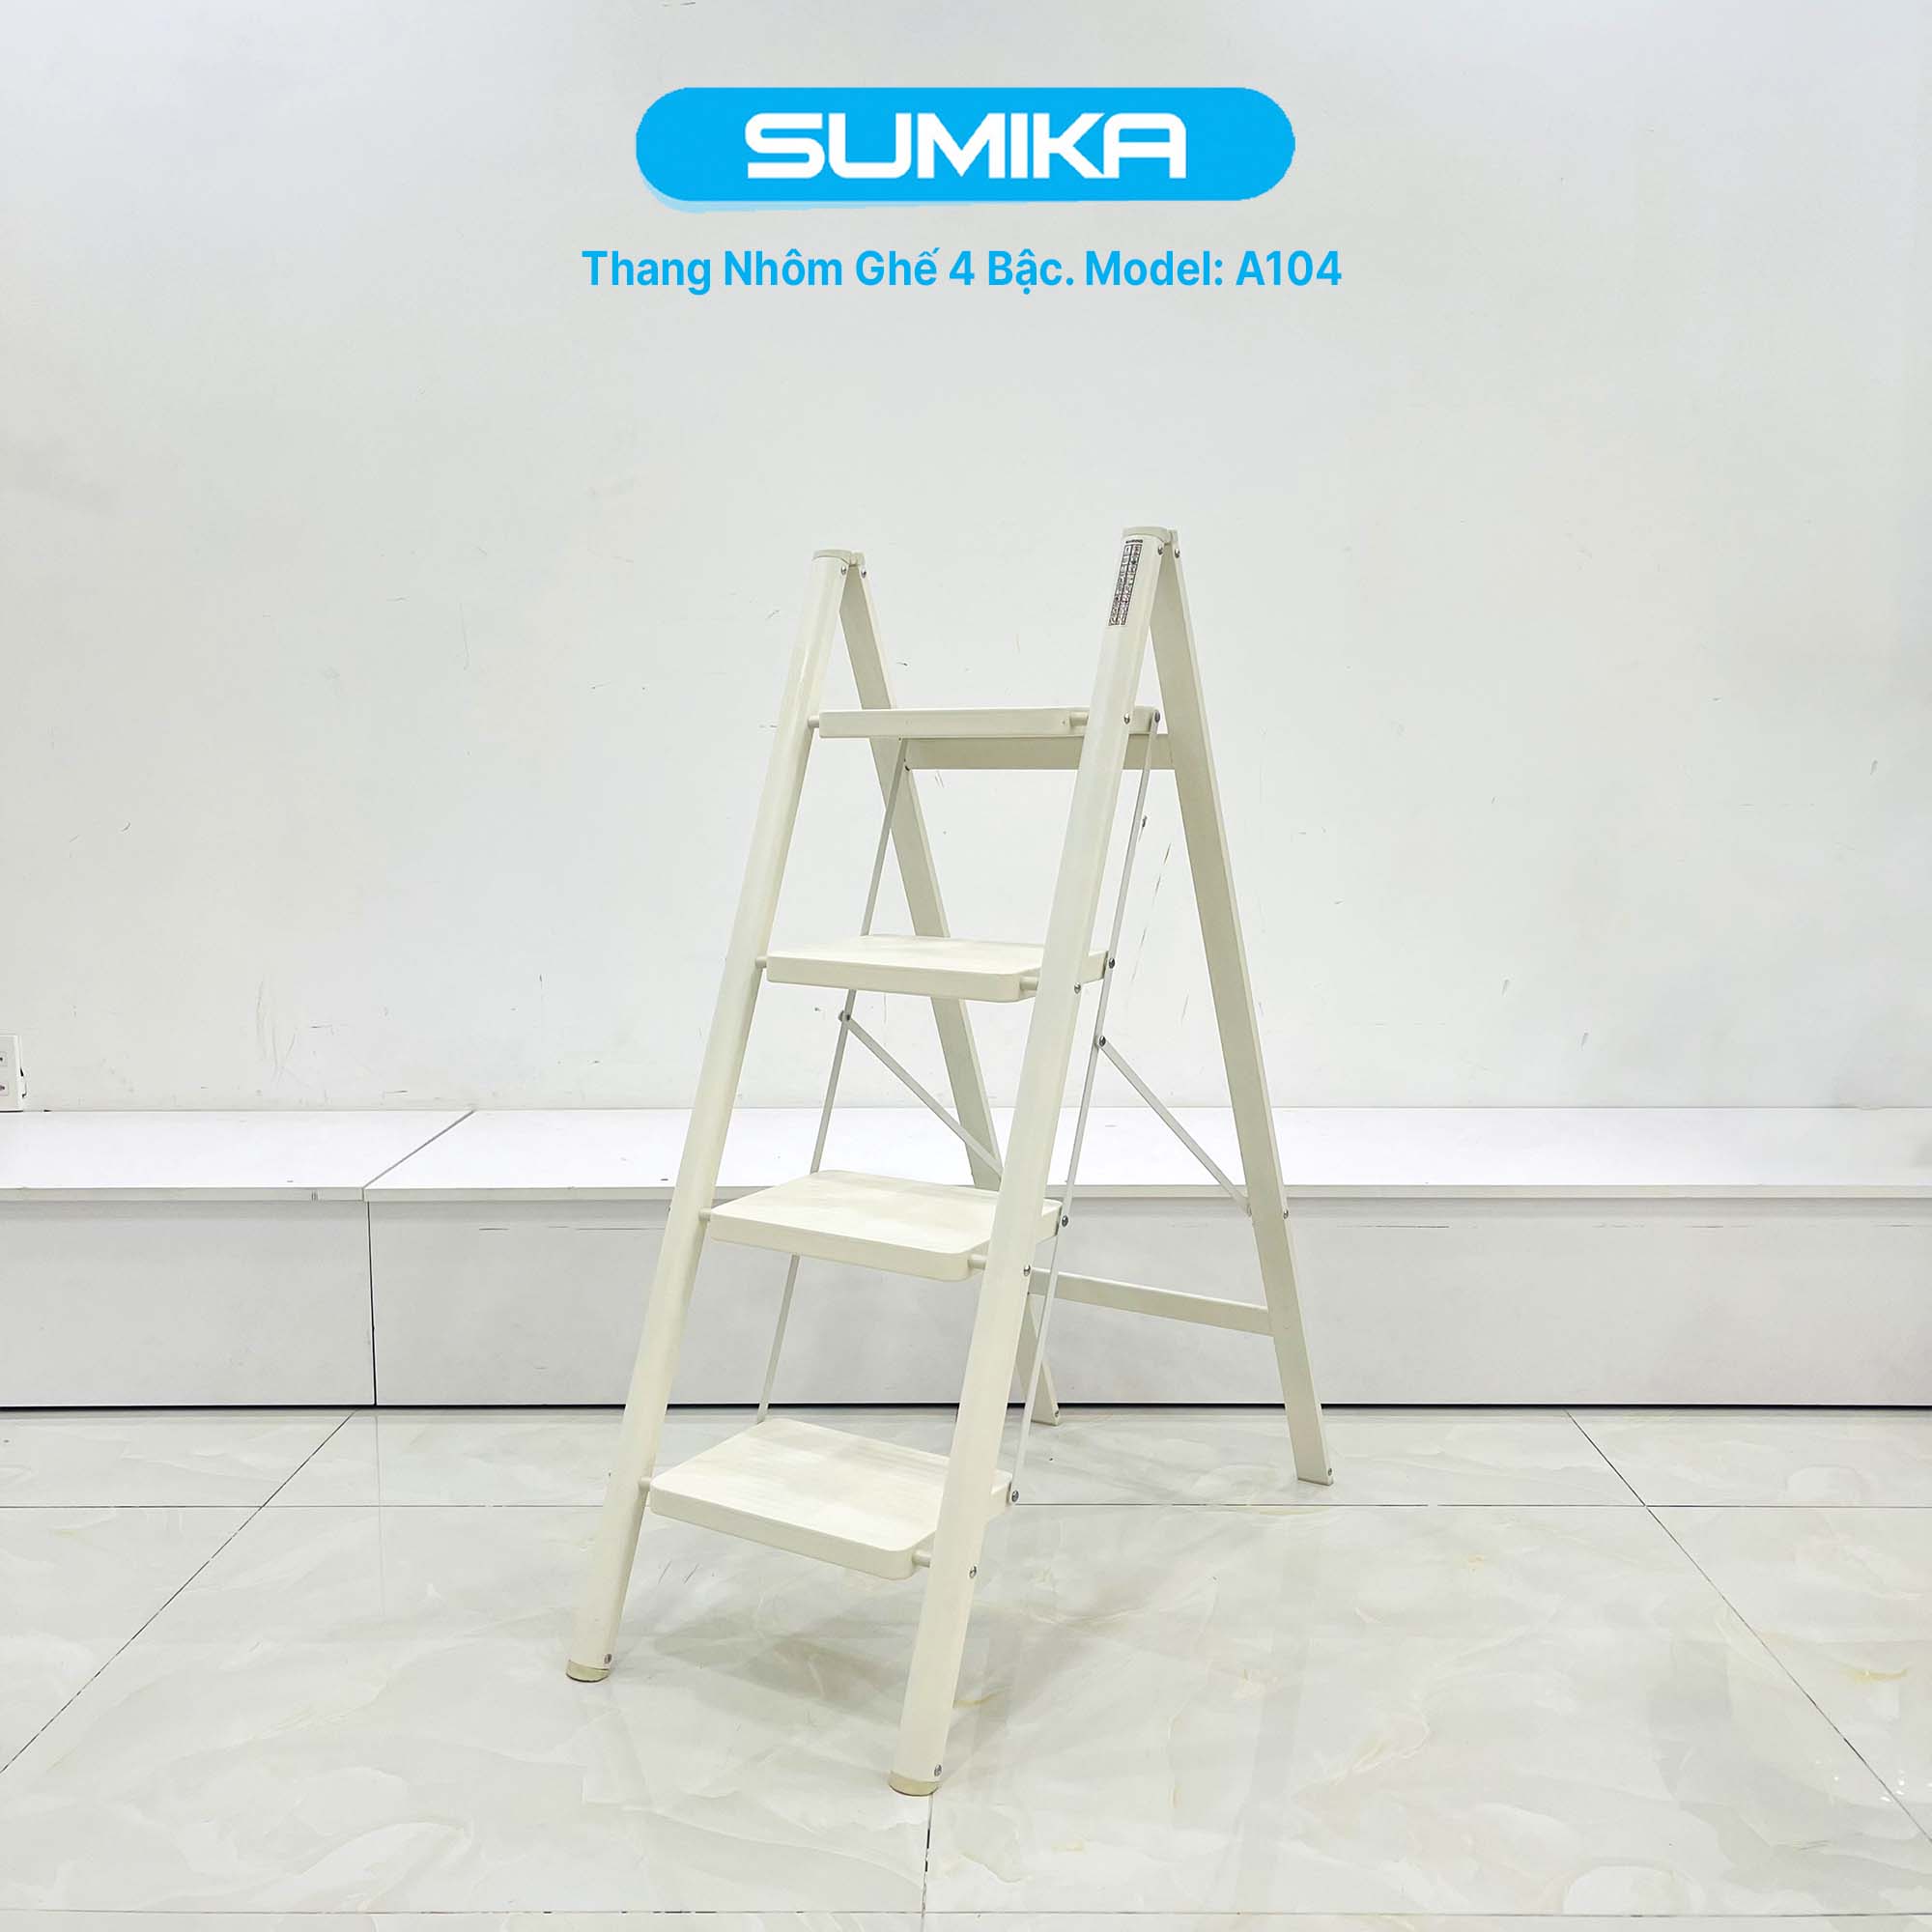 Thang nhôm ghế 4 bậc SUMIKA A104 (White), chiều cao 94cm